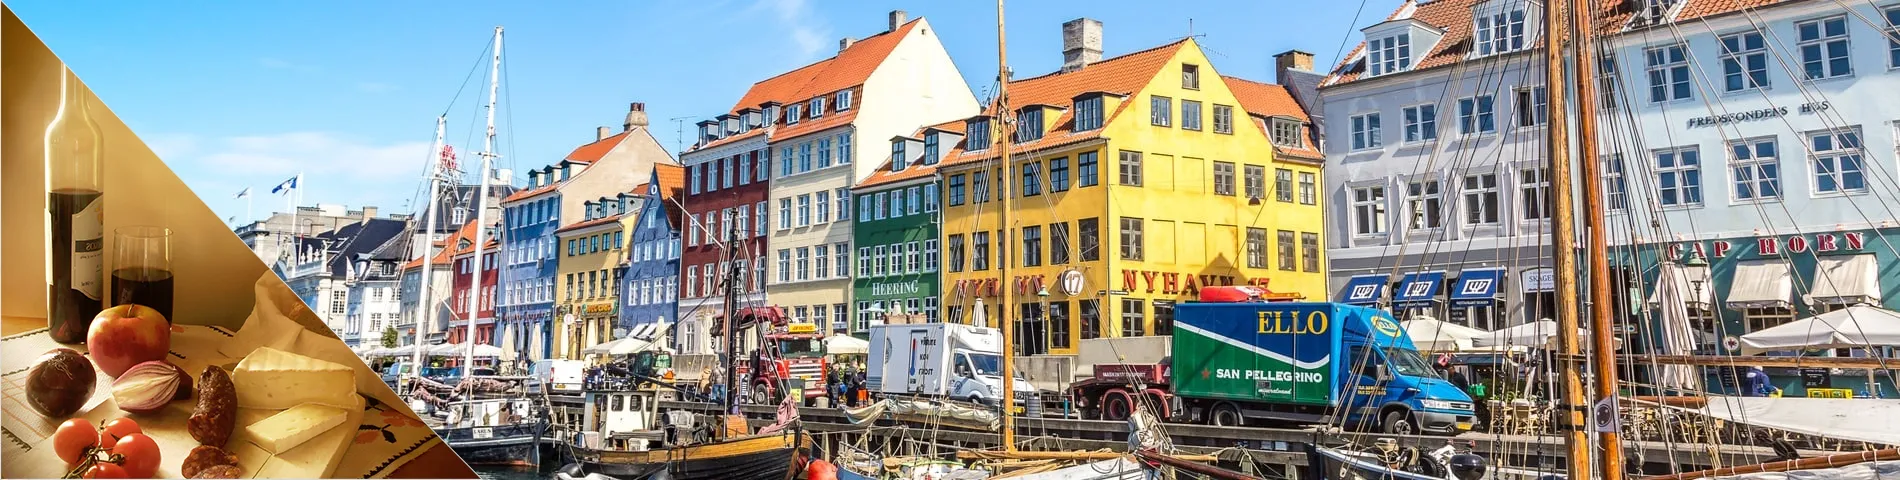 Копенгаген - Датский и культура